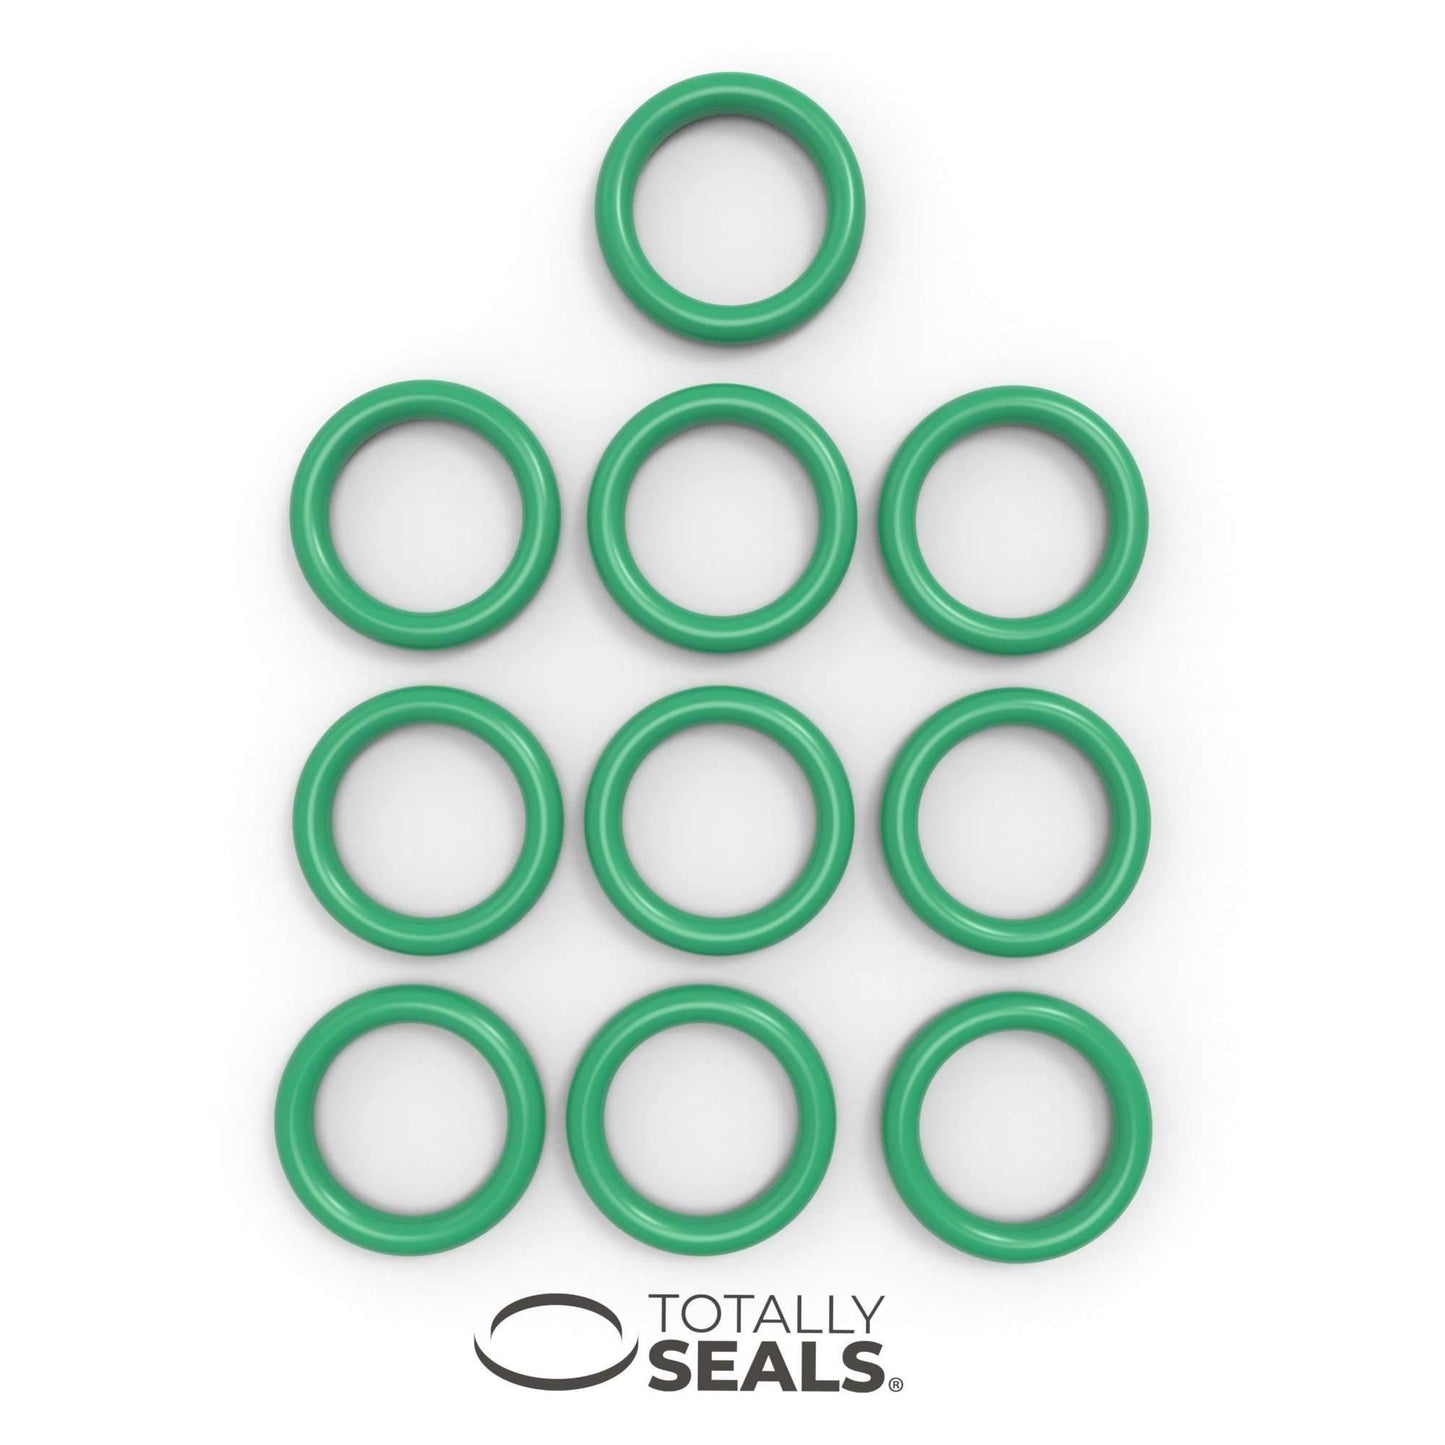 7mm x 2mm (11mm OD) FKM (Viton™) O-Rings - Totally Seals®